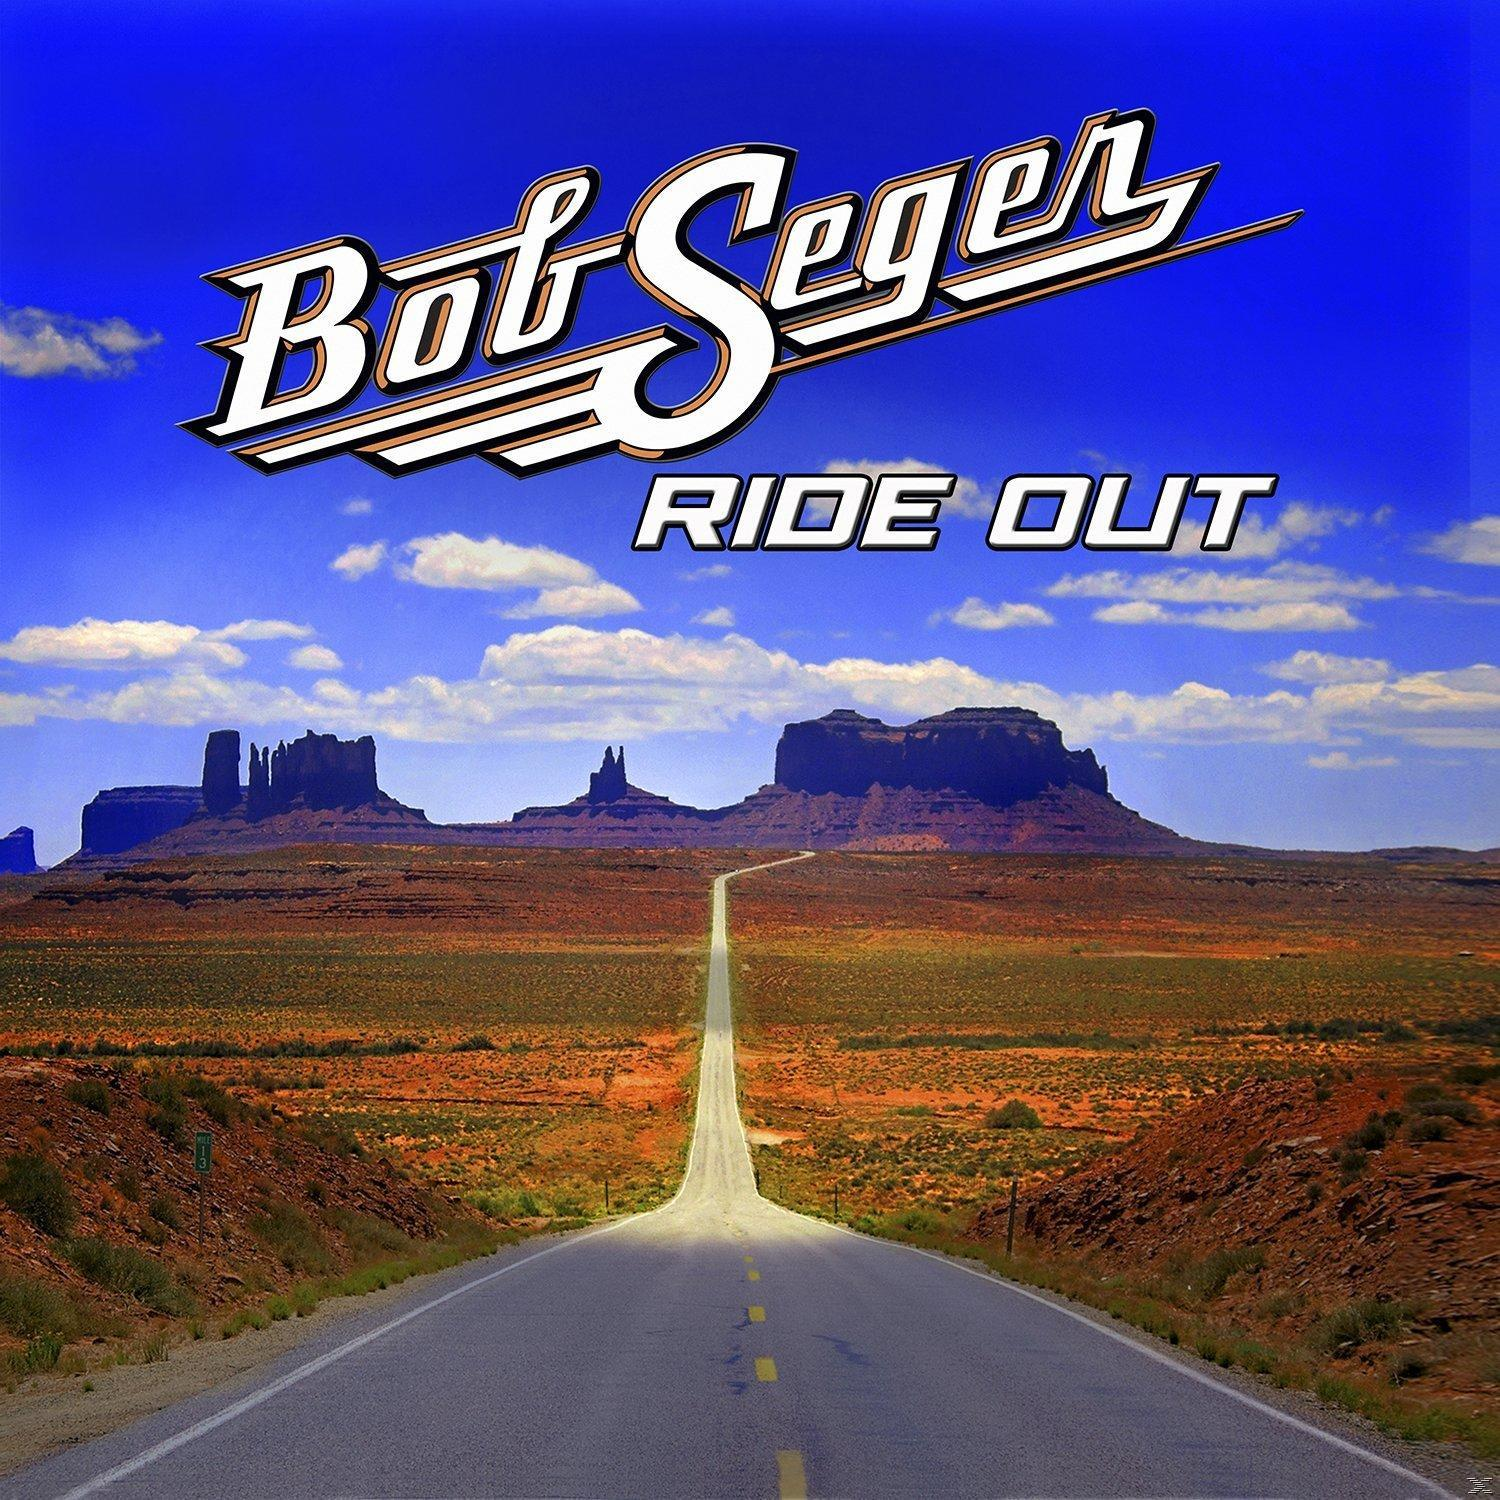 - Bob (Vinyl) Seger Out - Ride